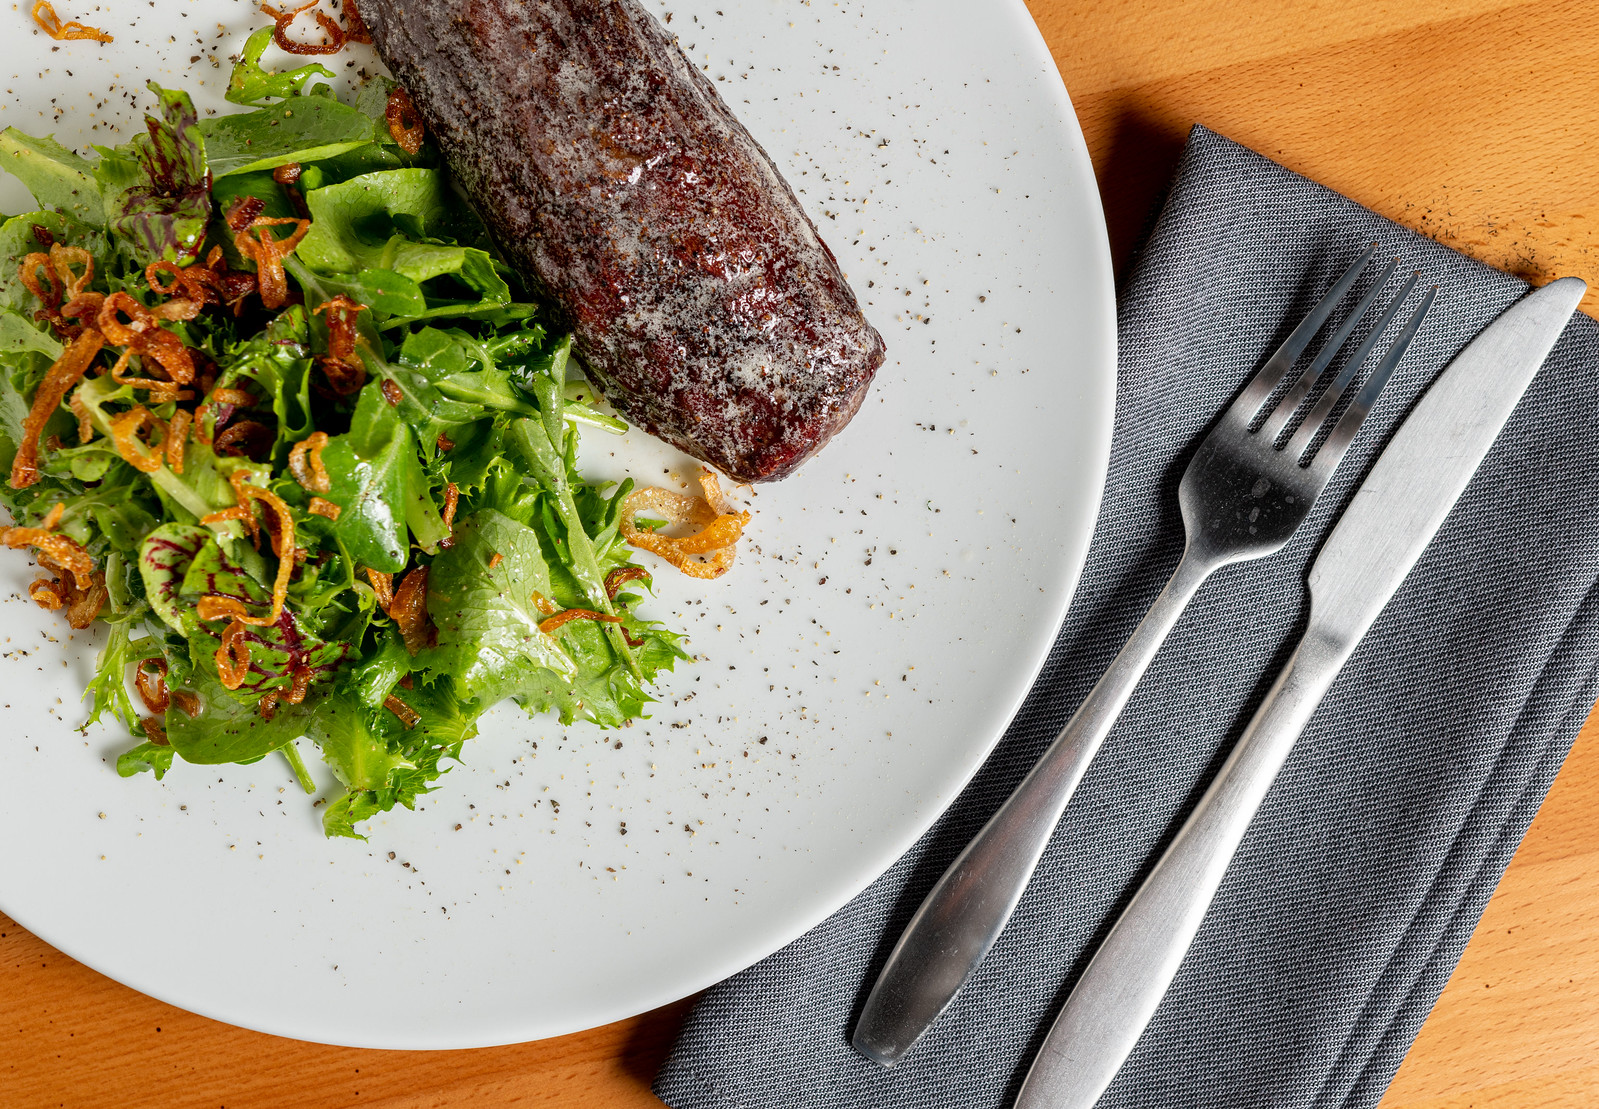 A strip steak on a plate next to a green salad.